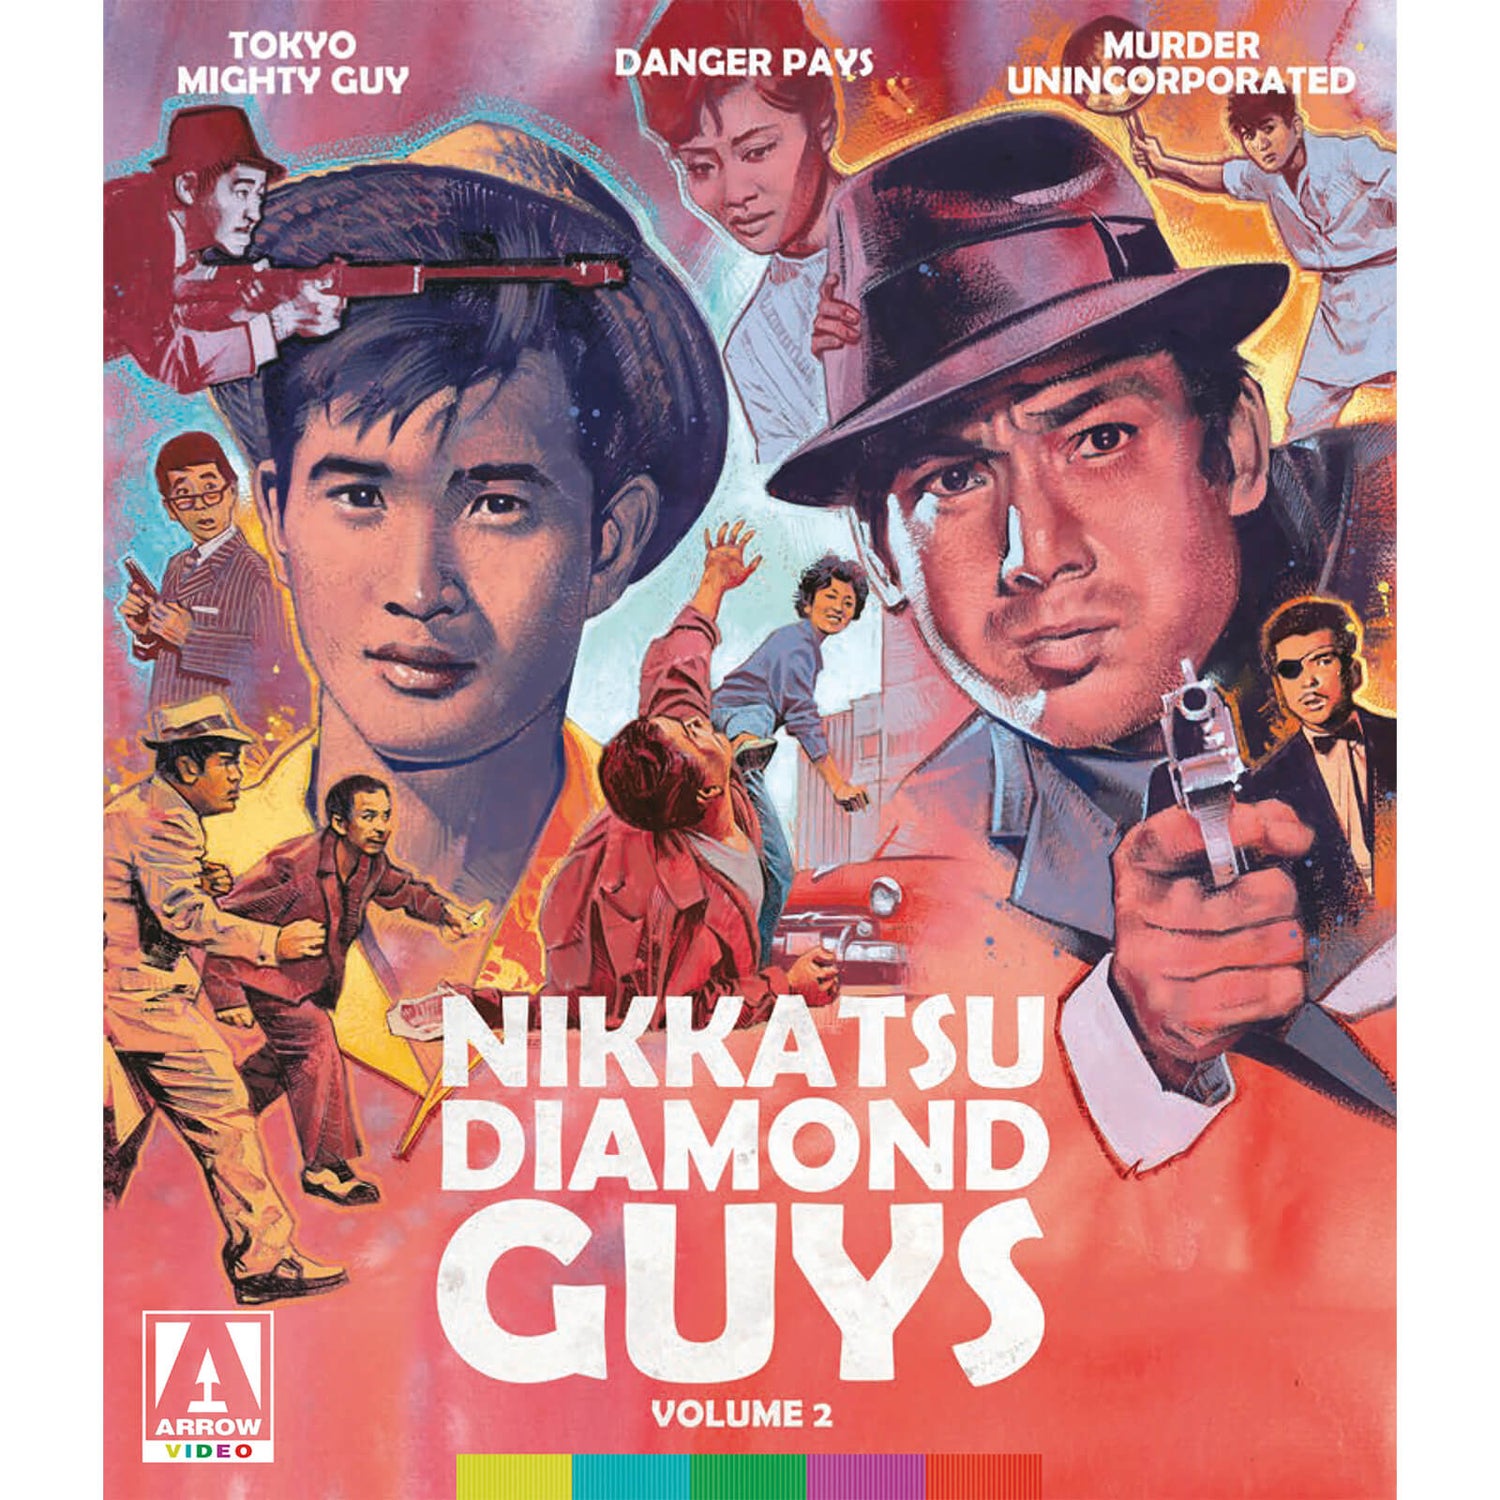 Nikkatsu Diamond Guys Volume 2 - Limited Edition (Includes DVD)